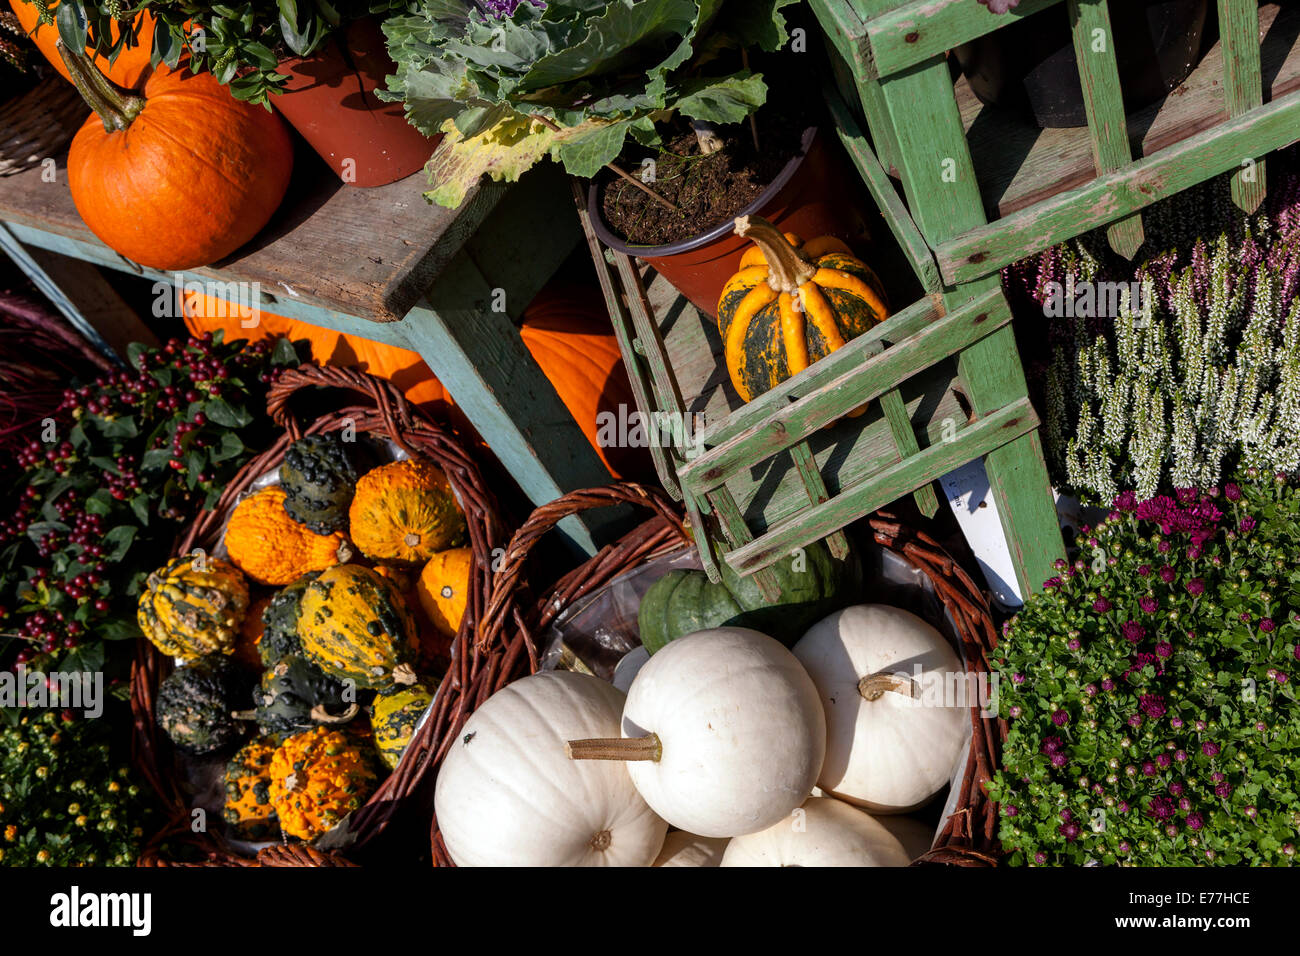 Pumpkins, squash Ornamental gourd garden plants, Decorative display Stock Photo